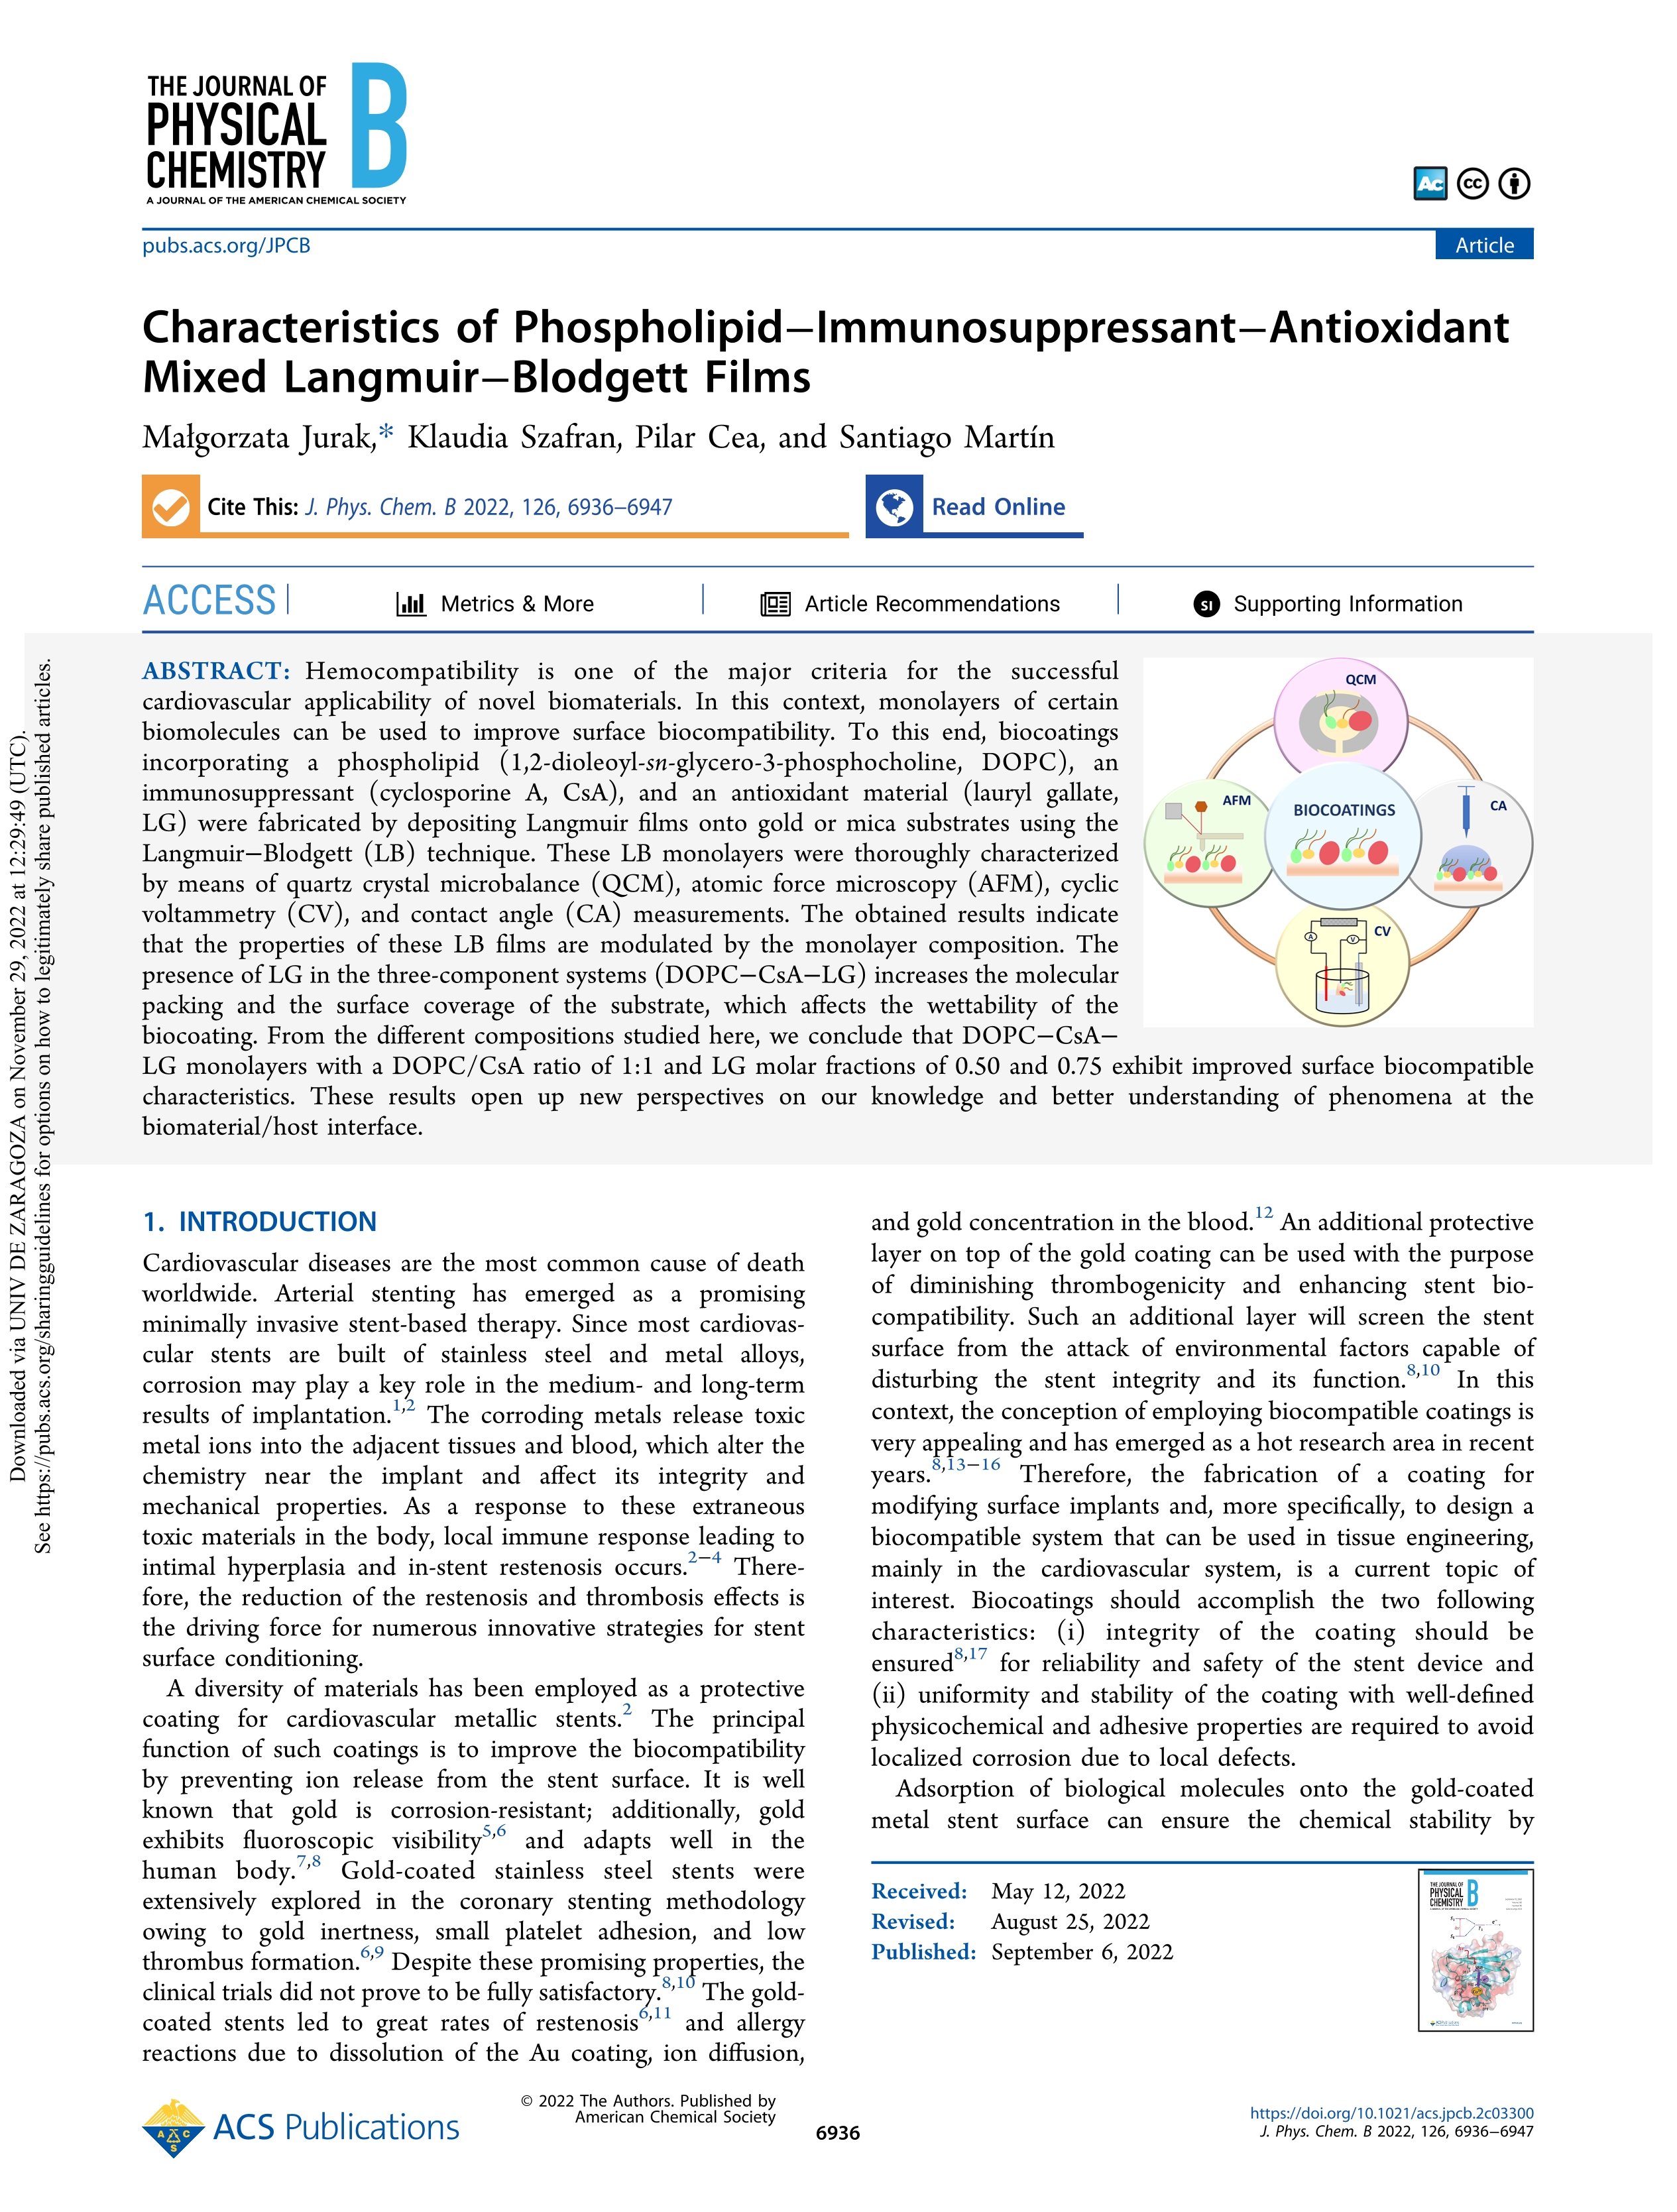 Characteristics of phospholipid–immunosuppressant–antioxidant mixed langmuir–blodgett films